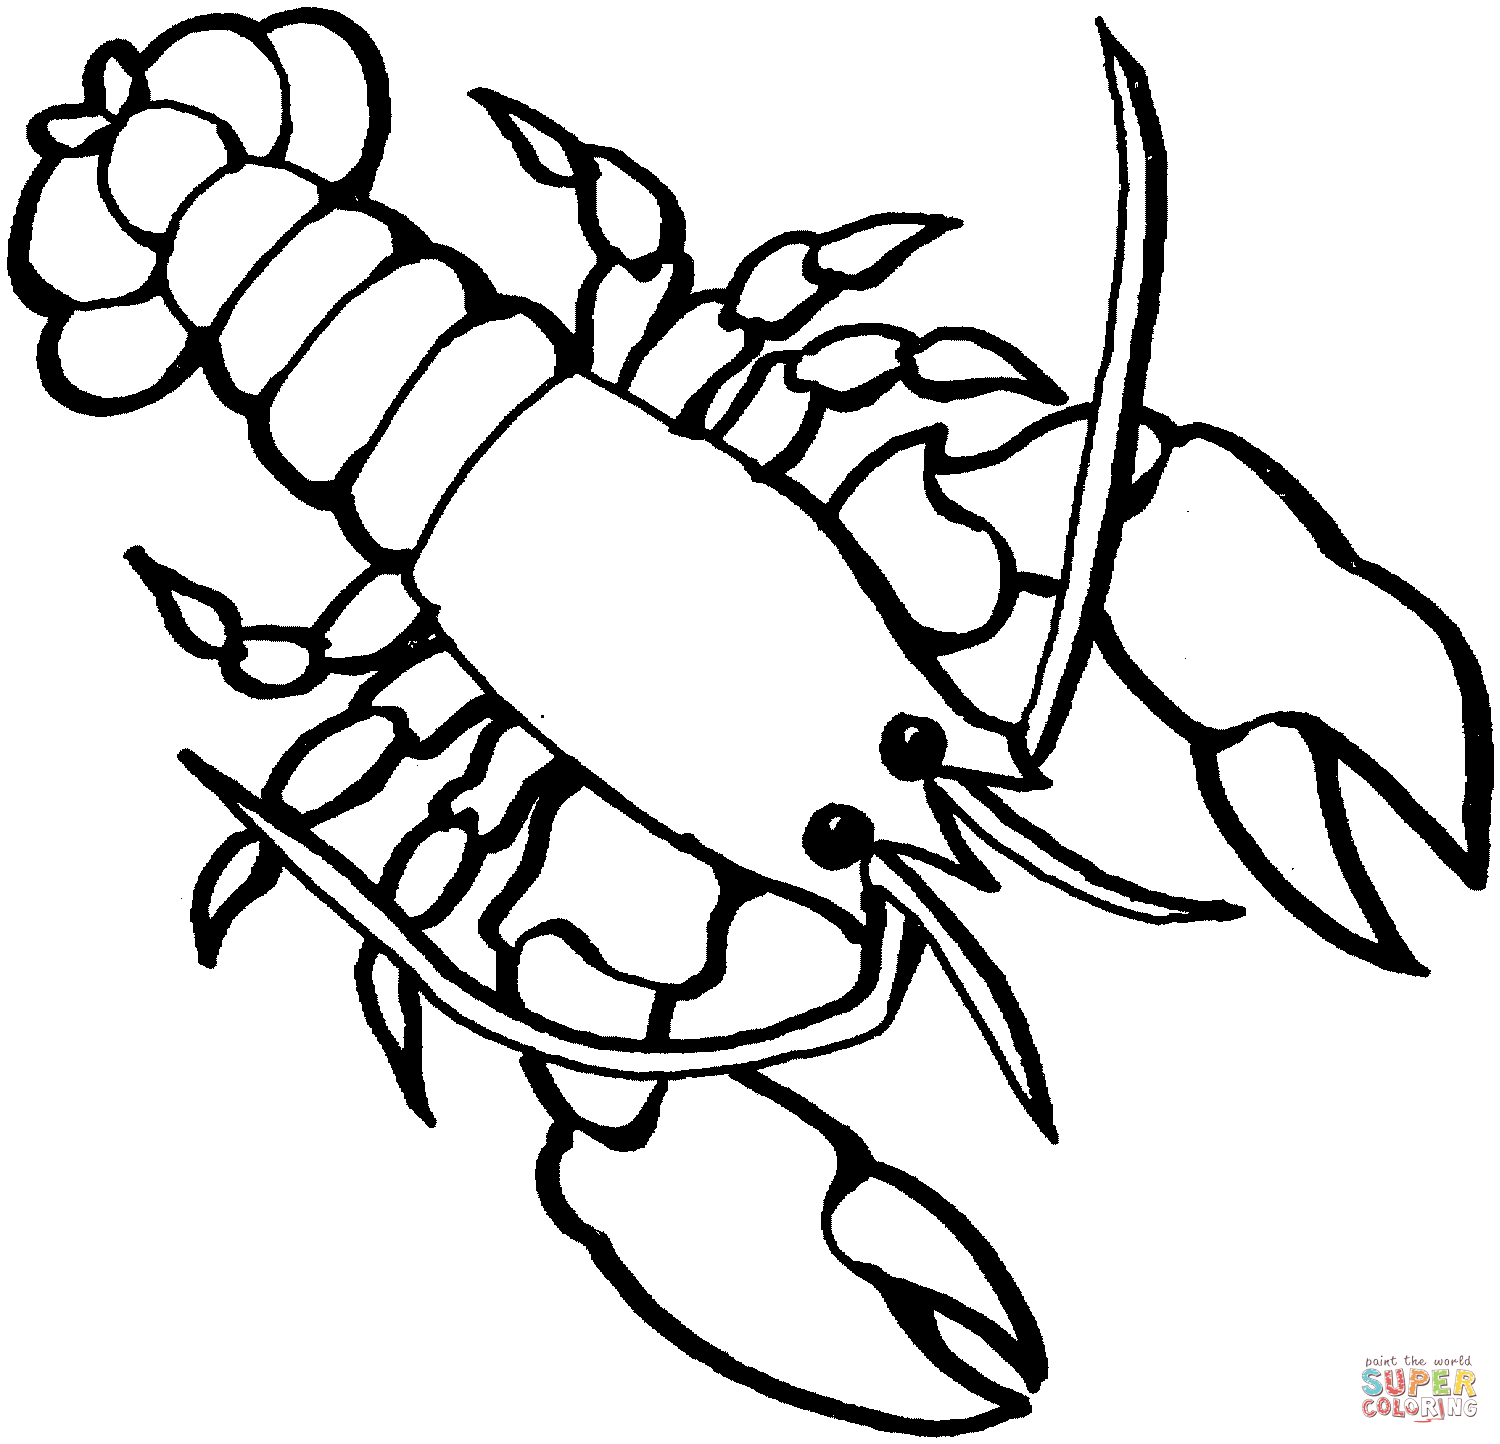 Crustacean coloring #3, Download drawings